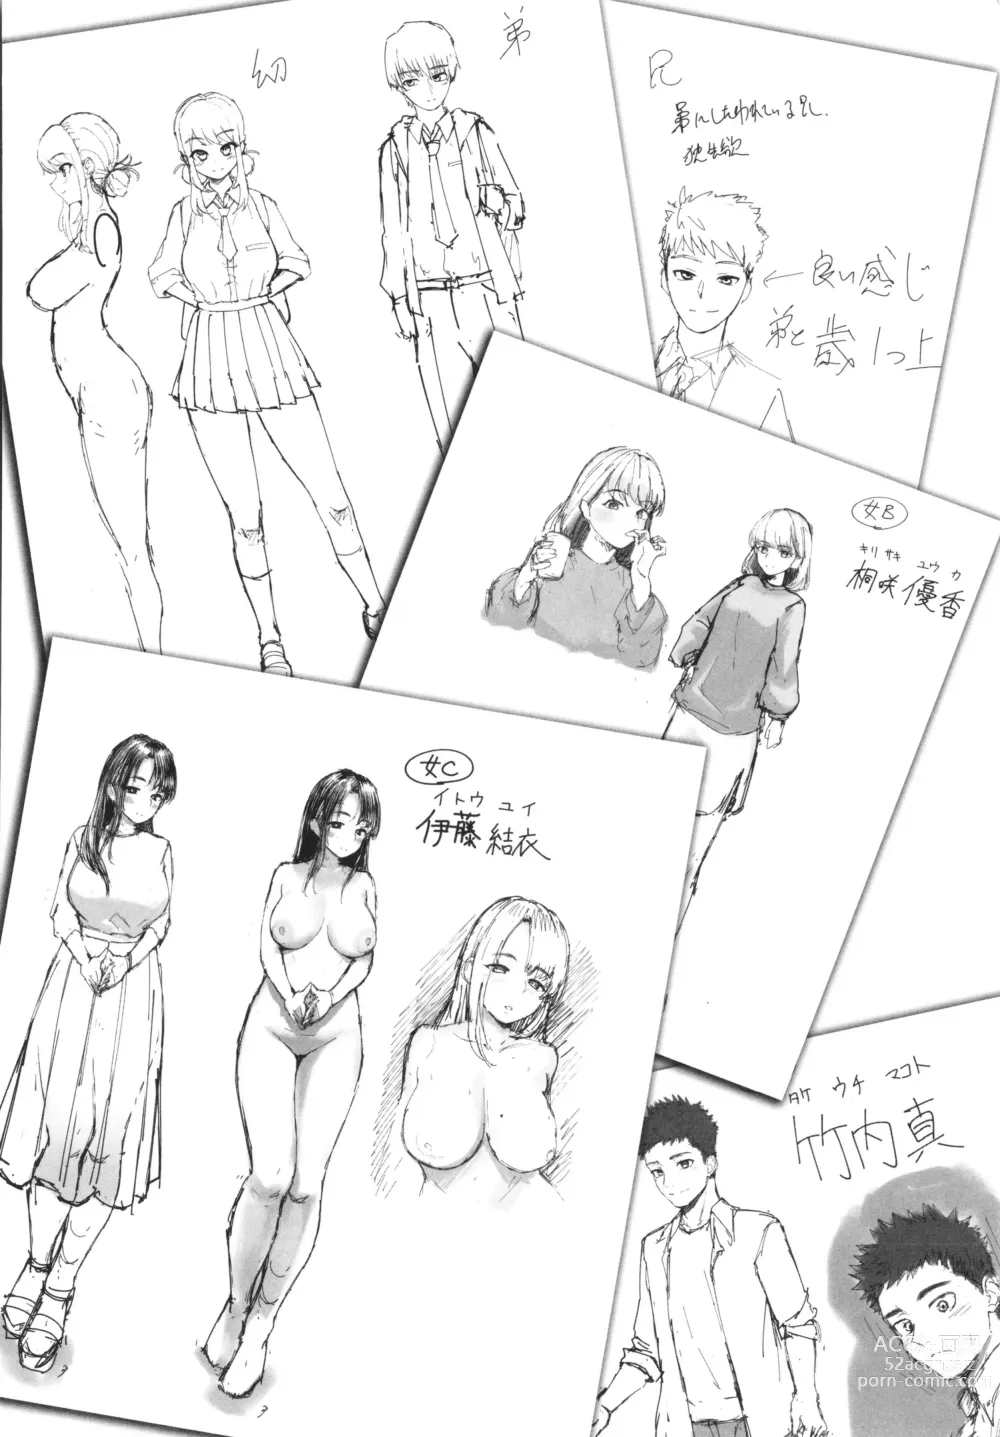 Page 211 of manga Kakuregoto